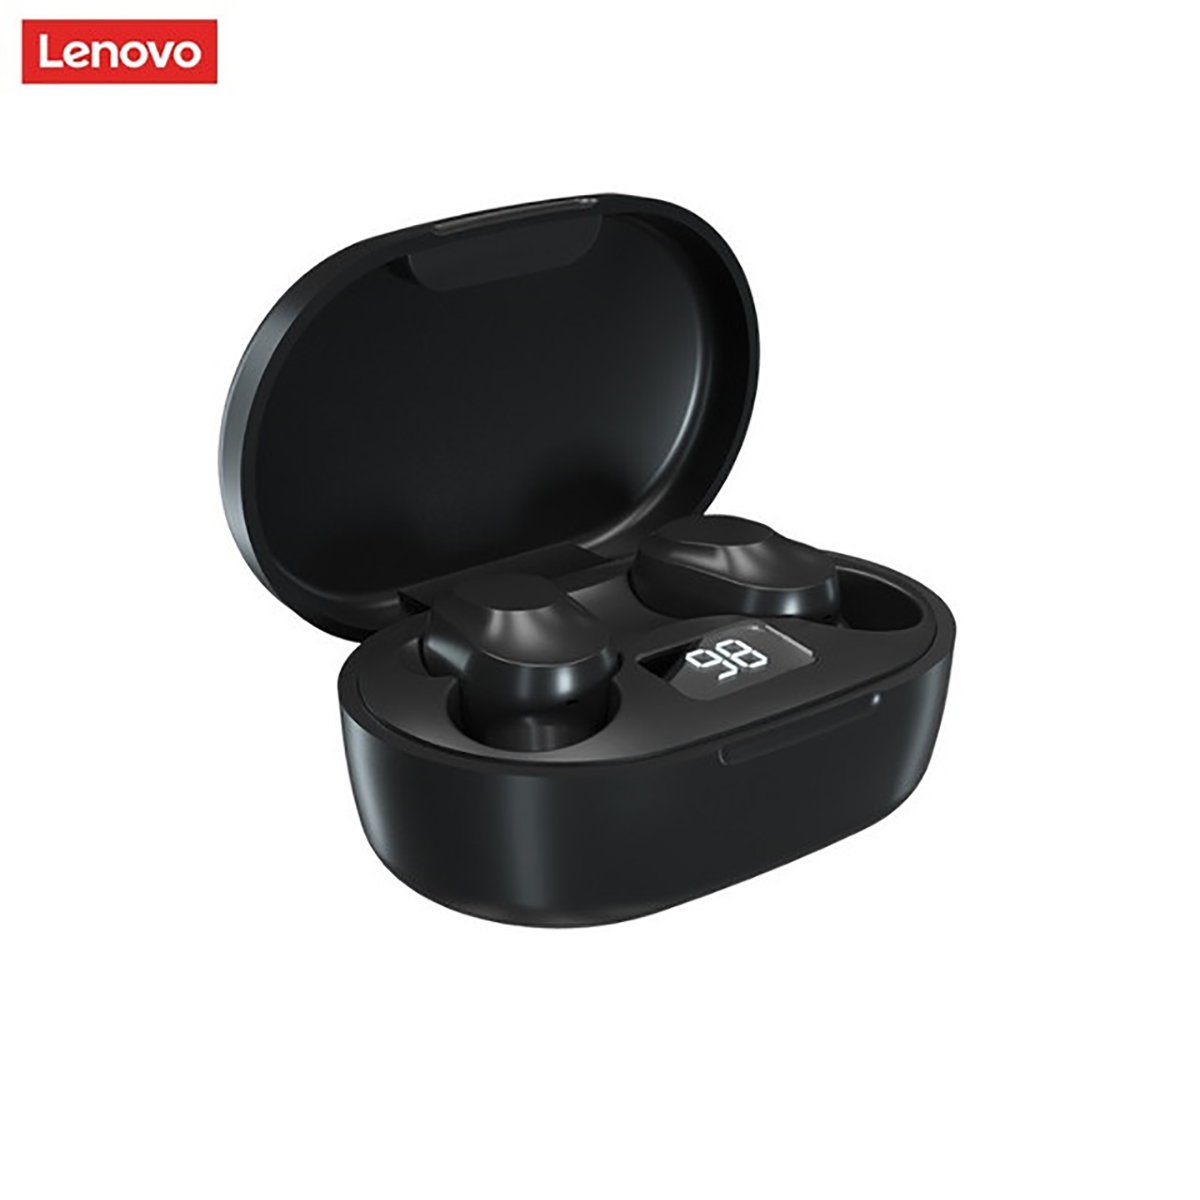 Lenovo XT91 mit Touch-Steuerung Bluetooth-Kopfhörer Stereo-Ohrhörer mit Kopfhörer-Ladehülle - Assistant, Wireless, Siri, 300 kabellos, Google Schwarz) 5.0, Bluetooth mAh (True